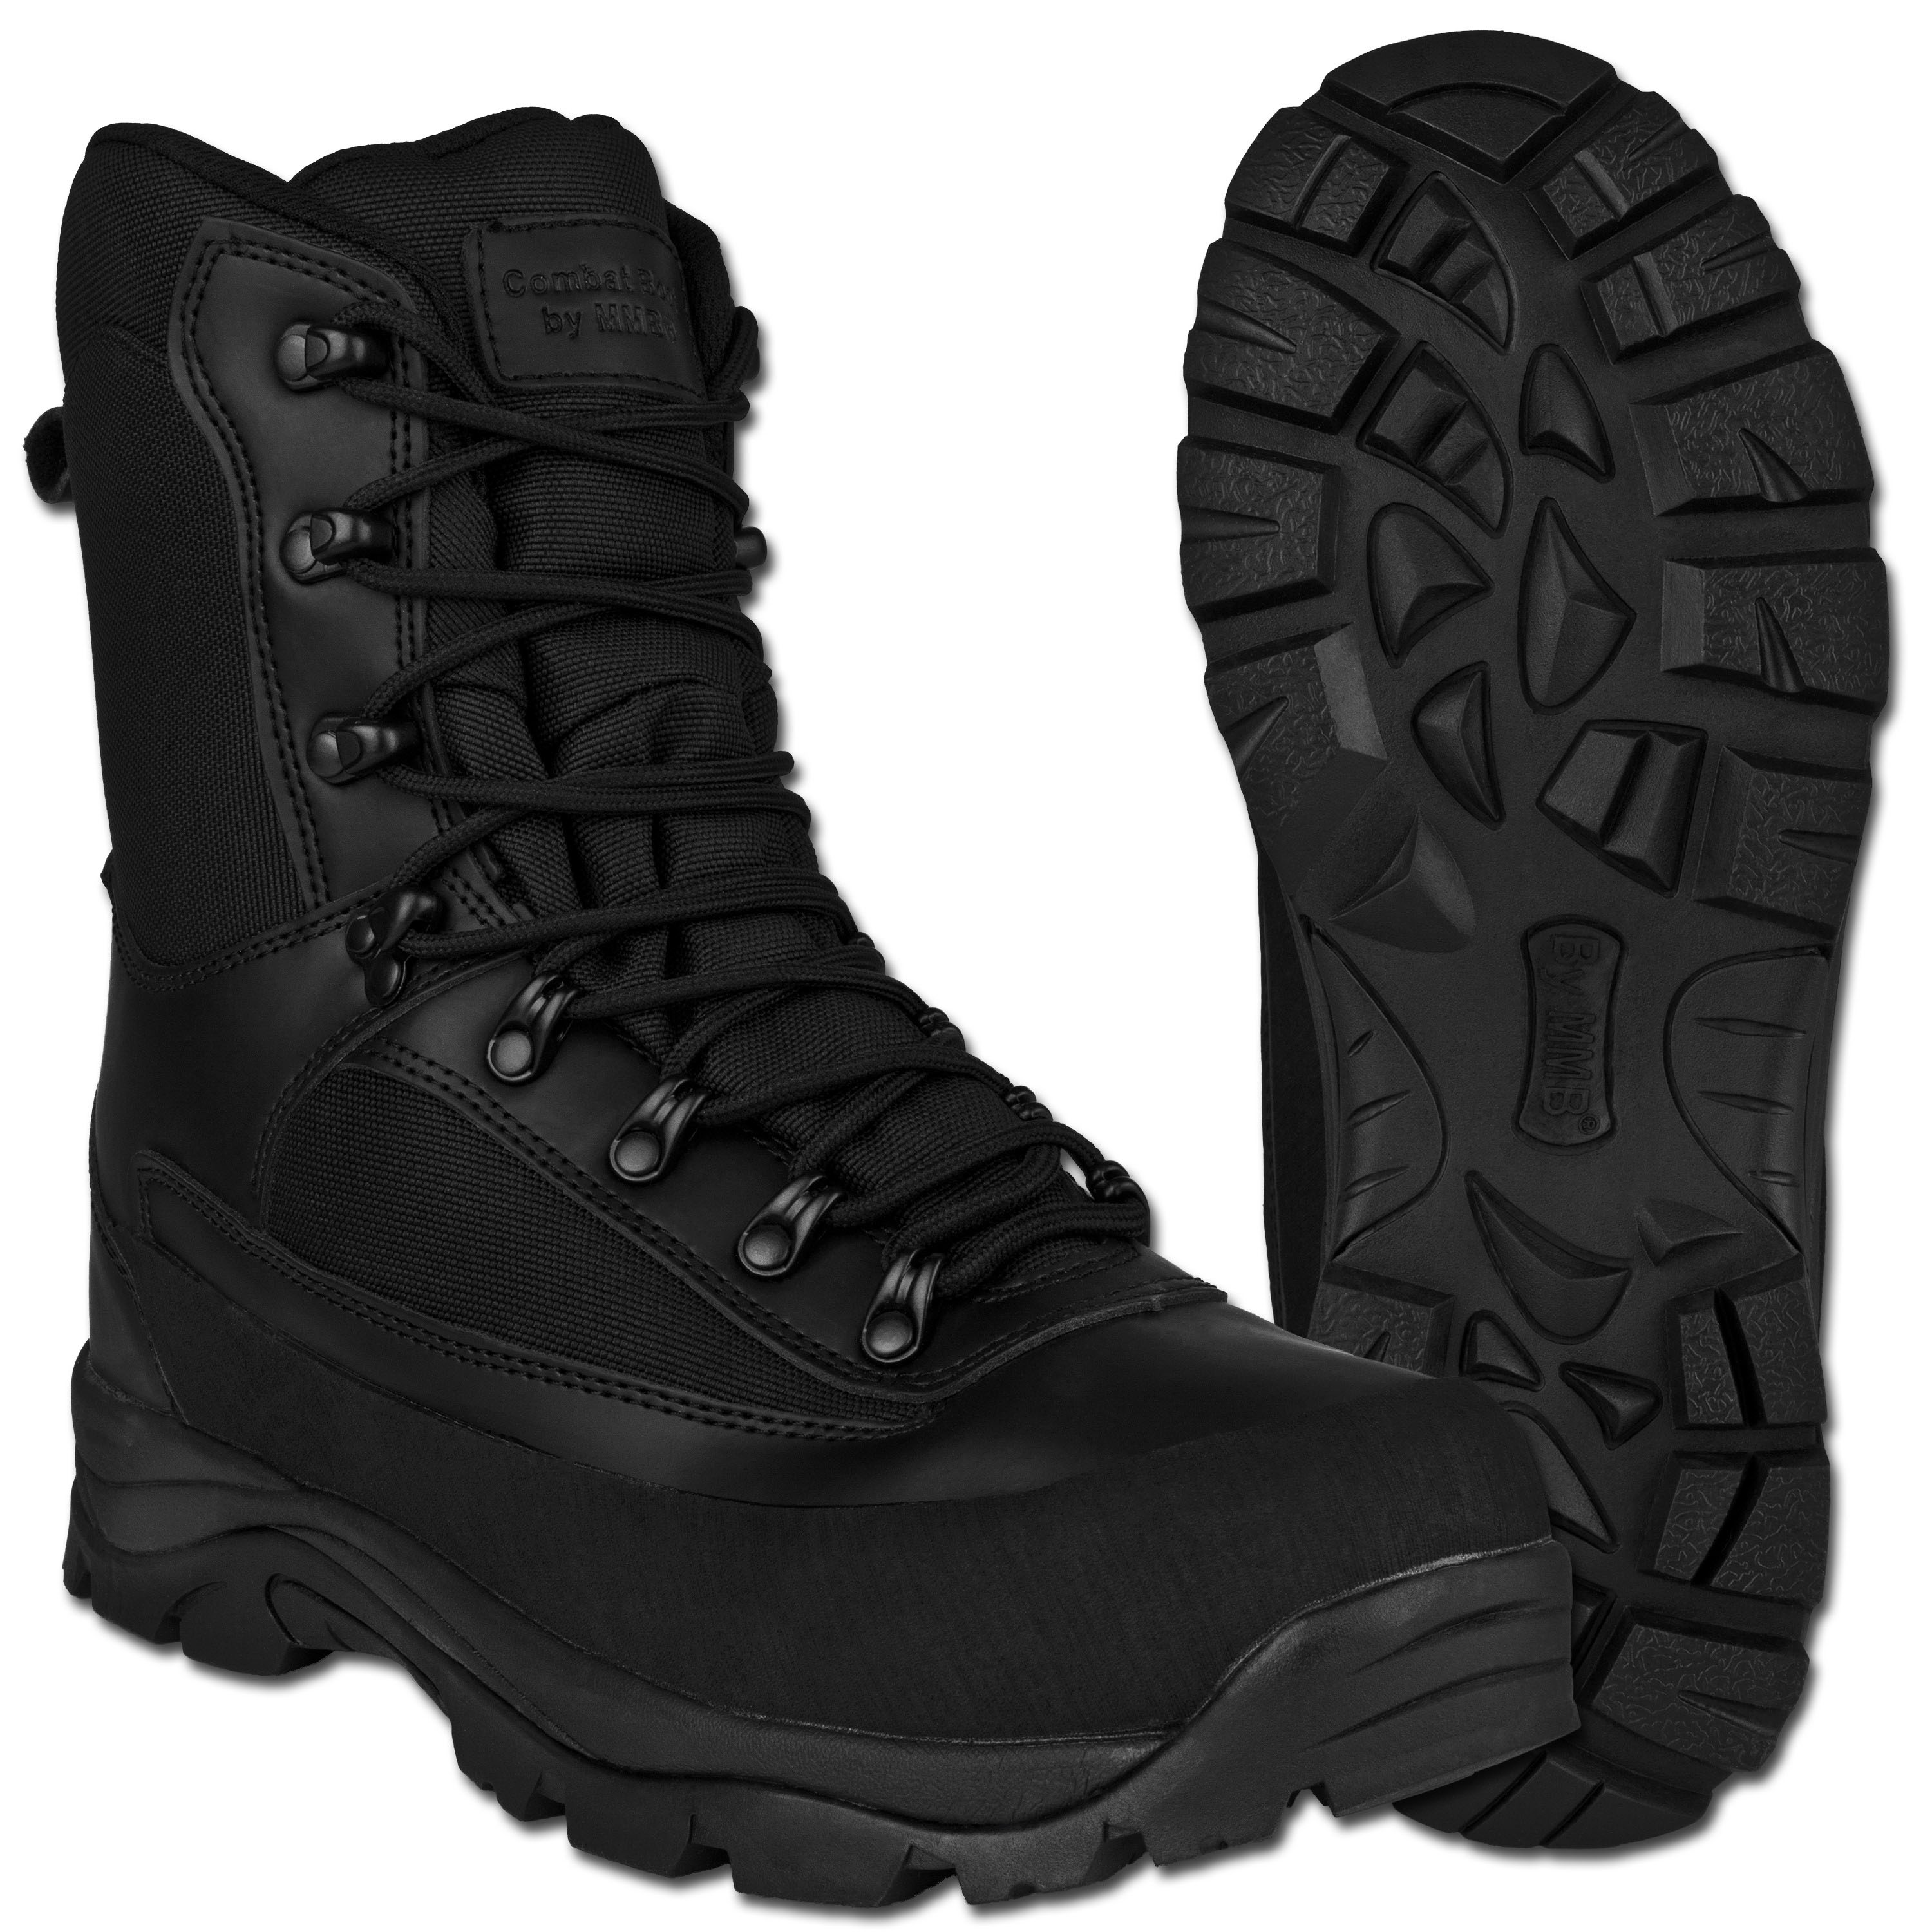 steel toe cap military boots